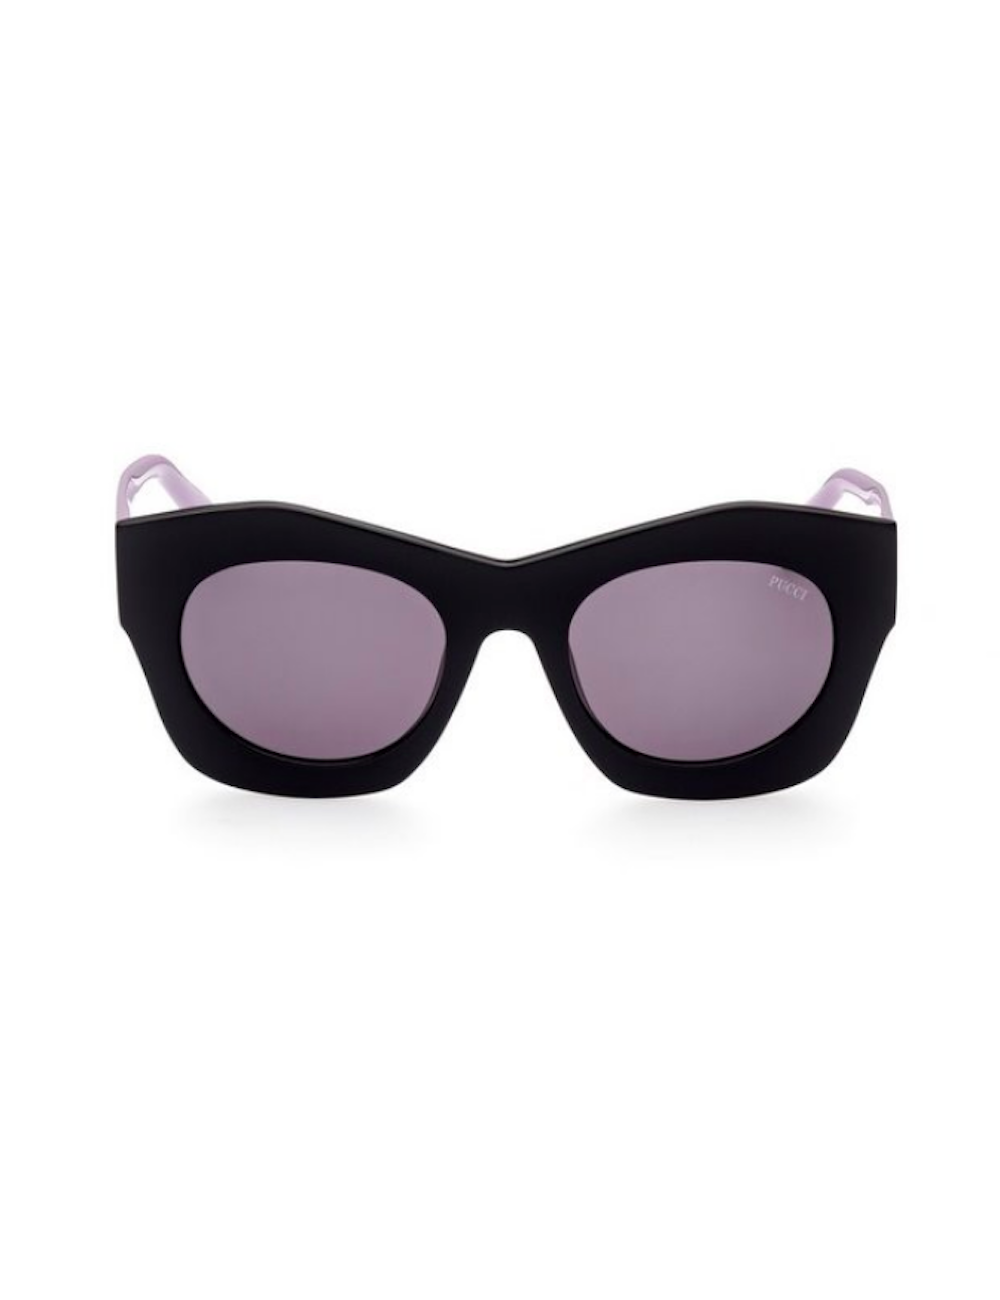 Emilio Pucci EP0163 01A sunglasses for women – Otticamauro.biz